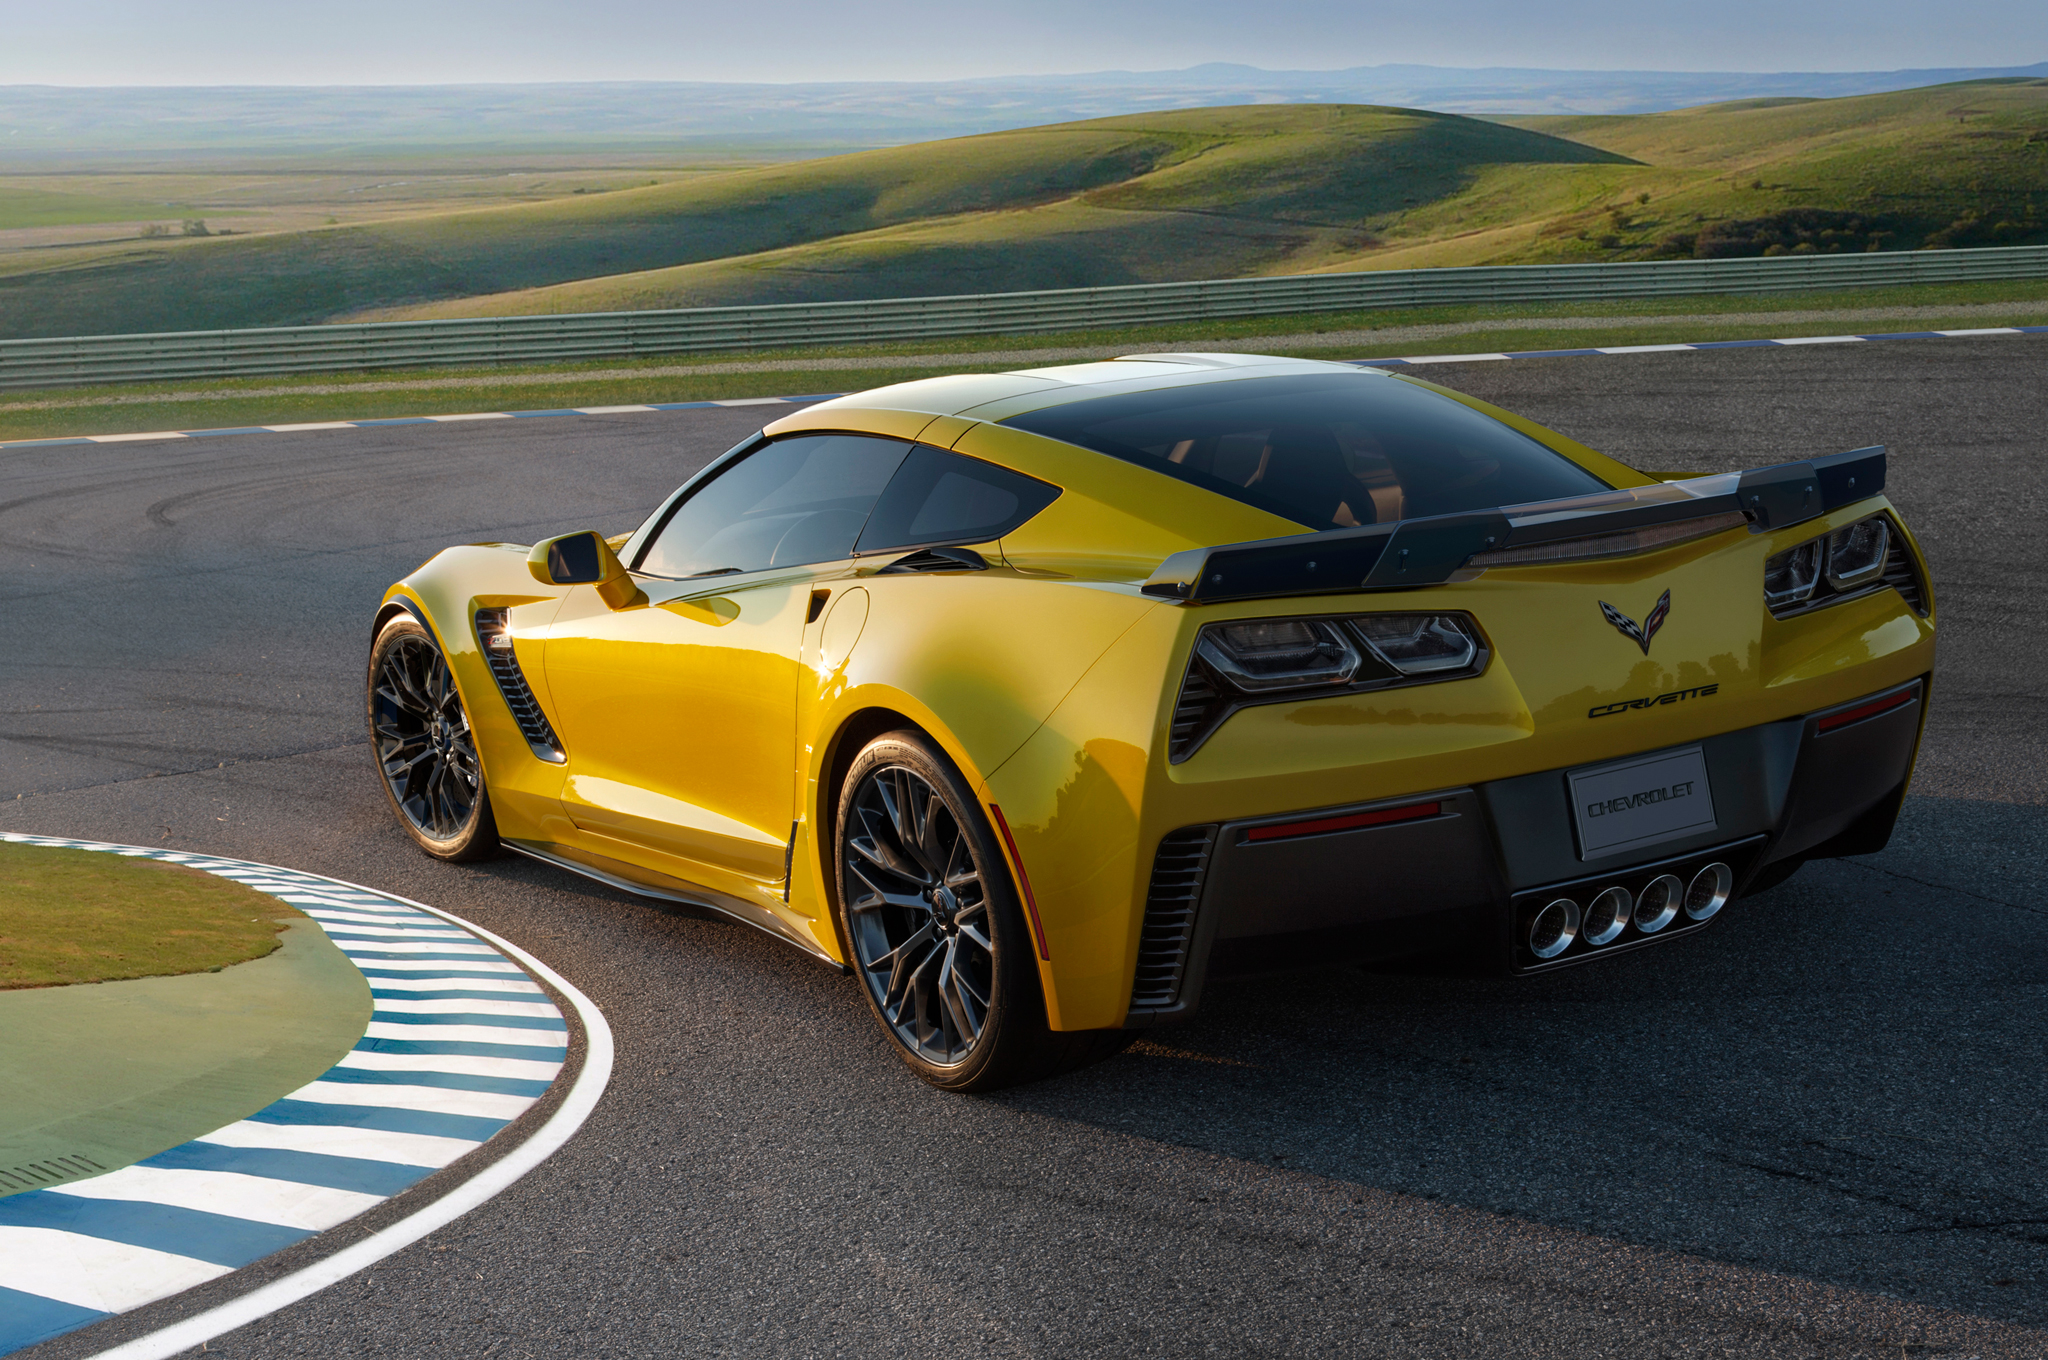 Amazing Chevrolet Corvette Pictures & Backgrounds